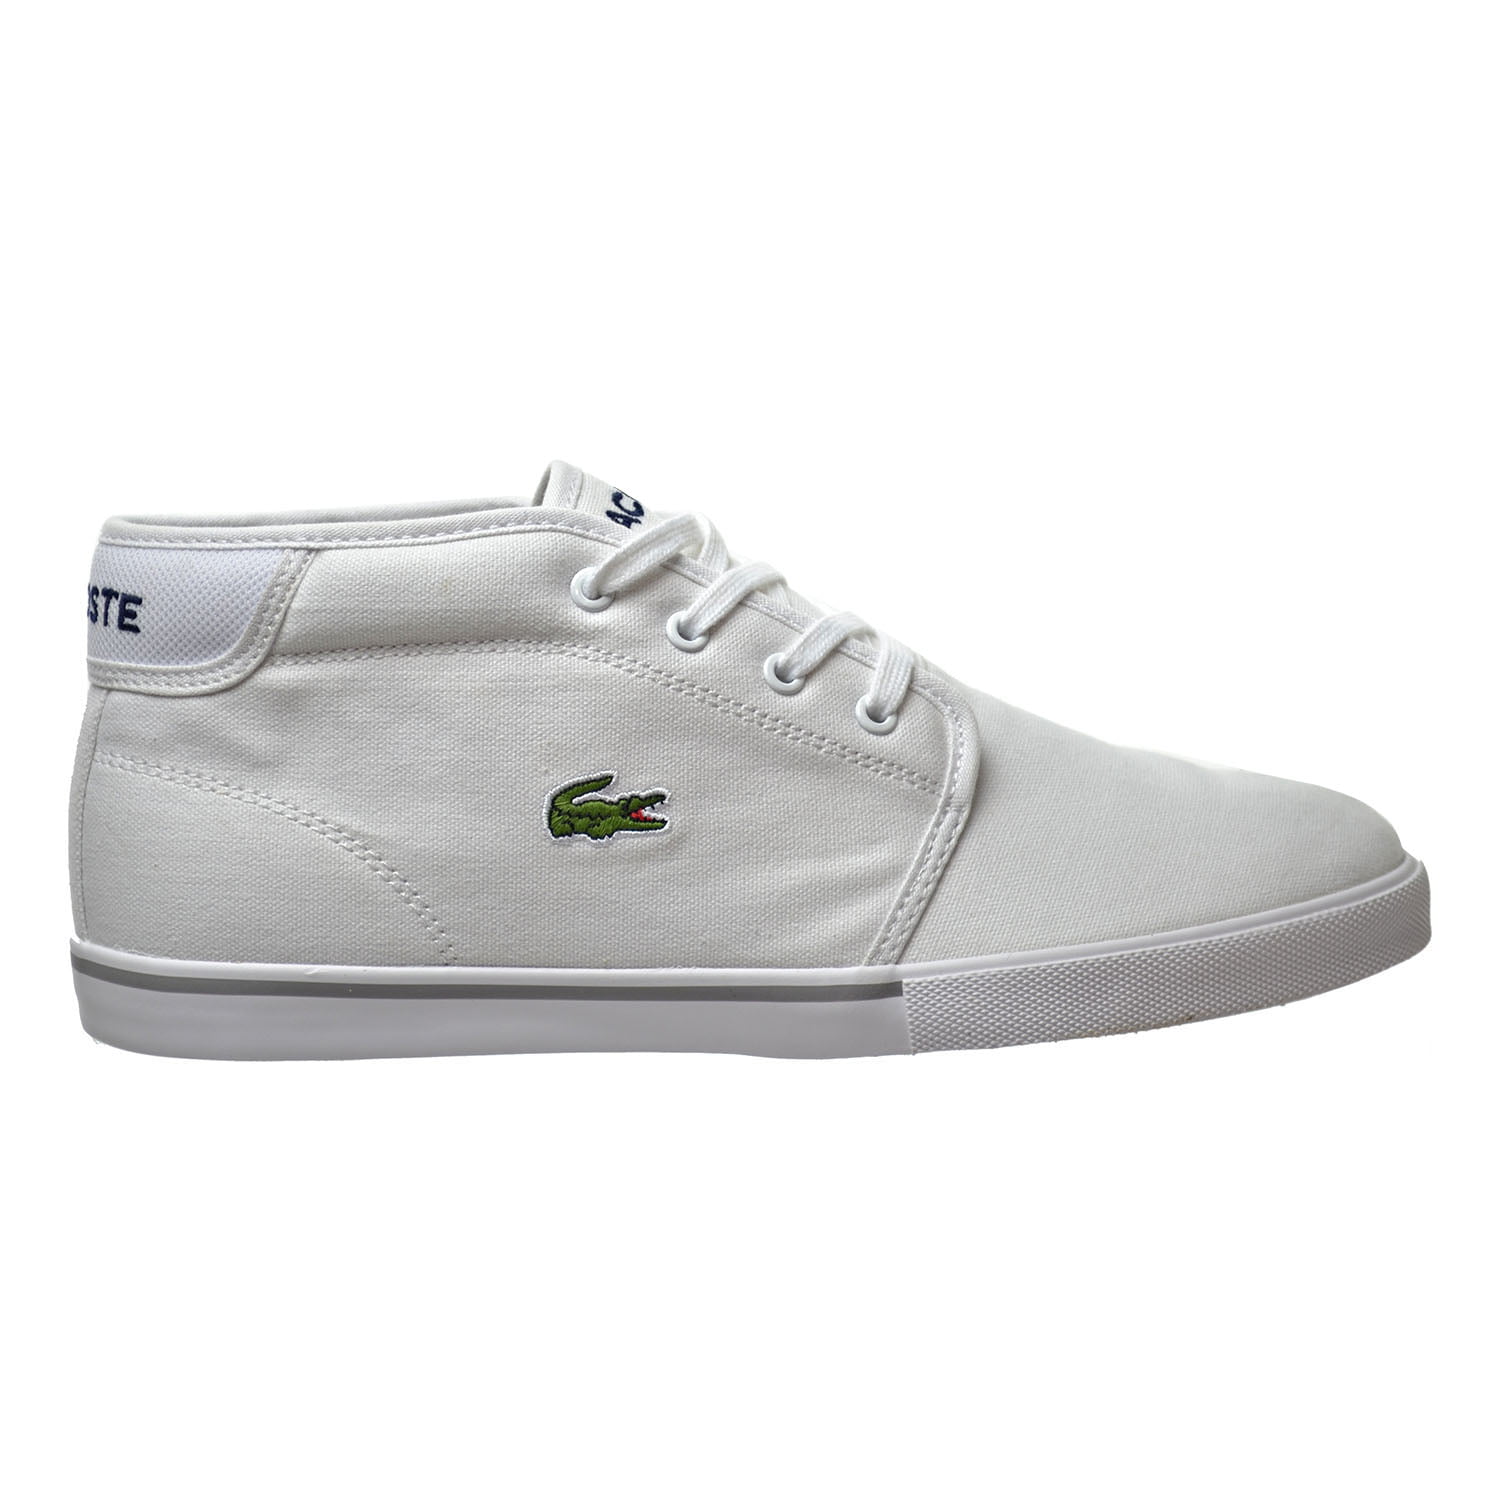 Lacoste Ampthill LCR2 CNV Shoes White/White 7-27spm1075-21g - Walmart.com